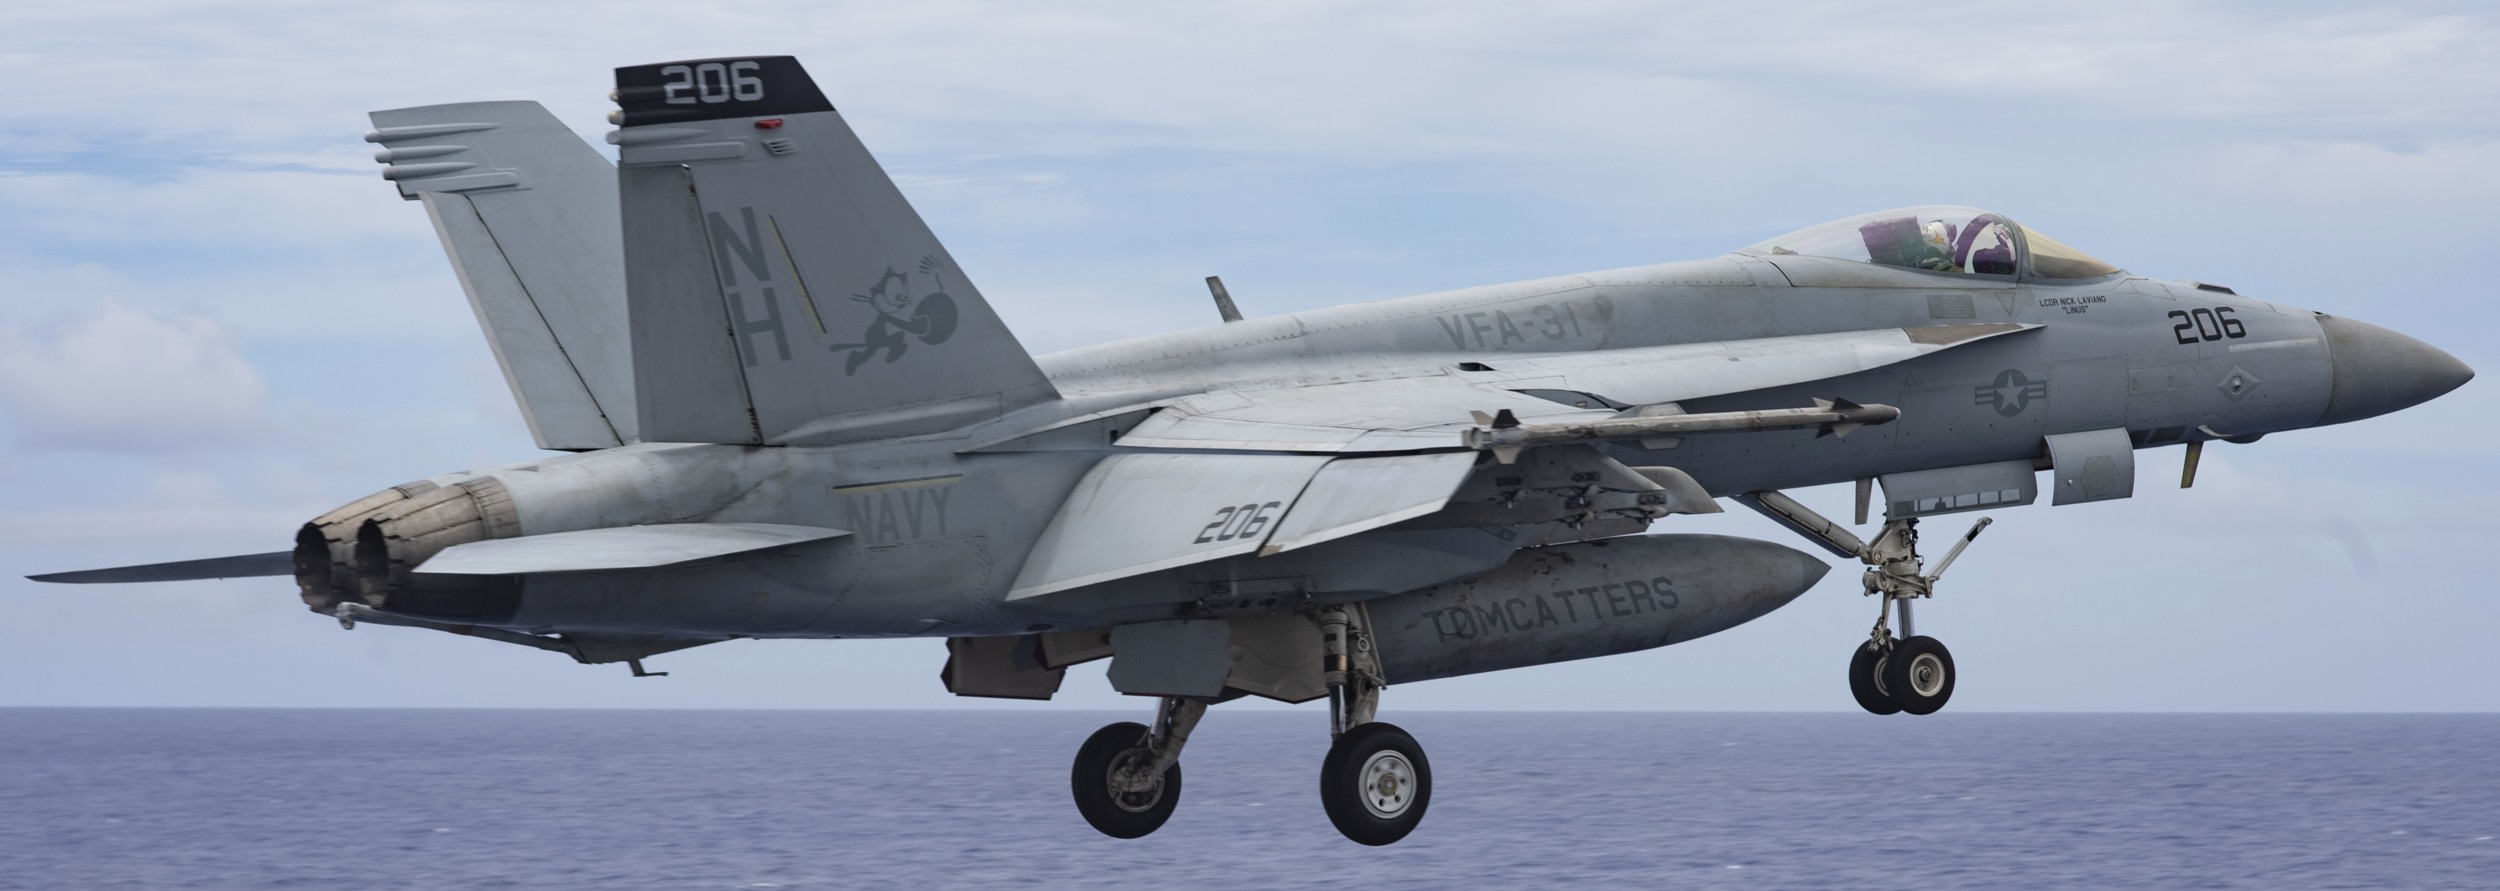 vfa-31 tomcatters strike fighter squadron f/a-18e super hornet us navy cvn-71 uss theodore roosevelt cvw-11 76